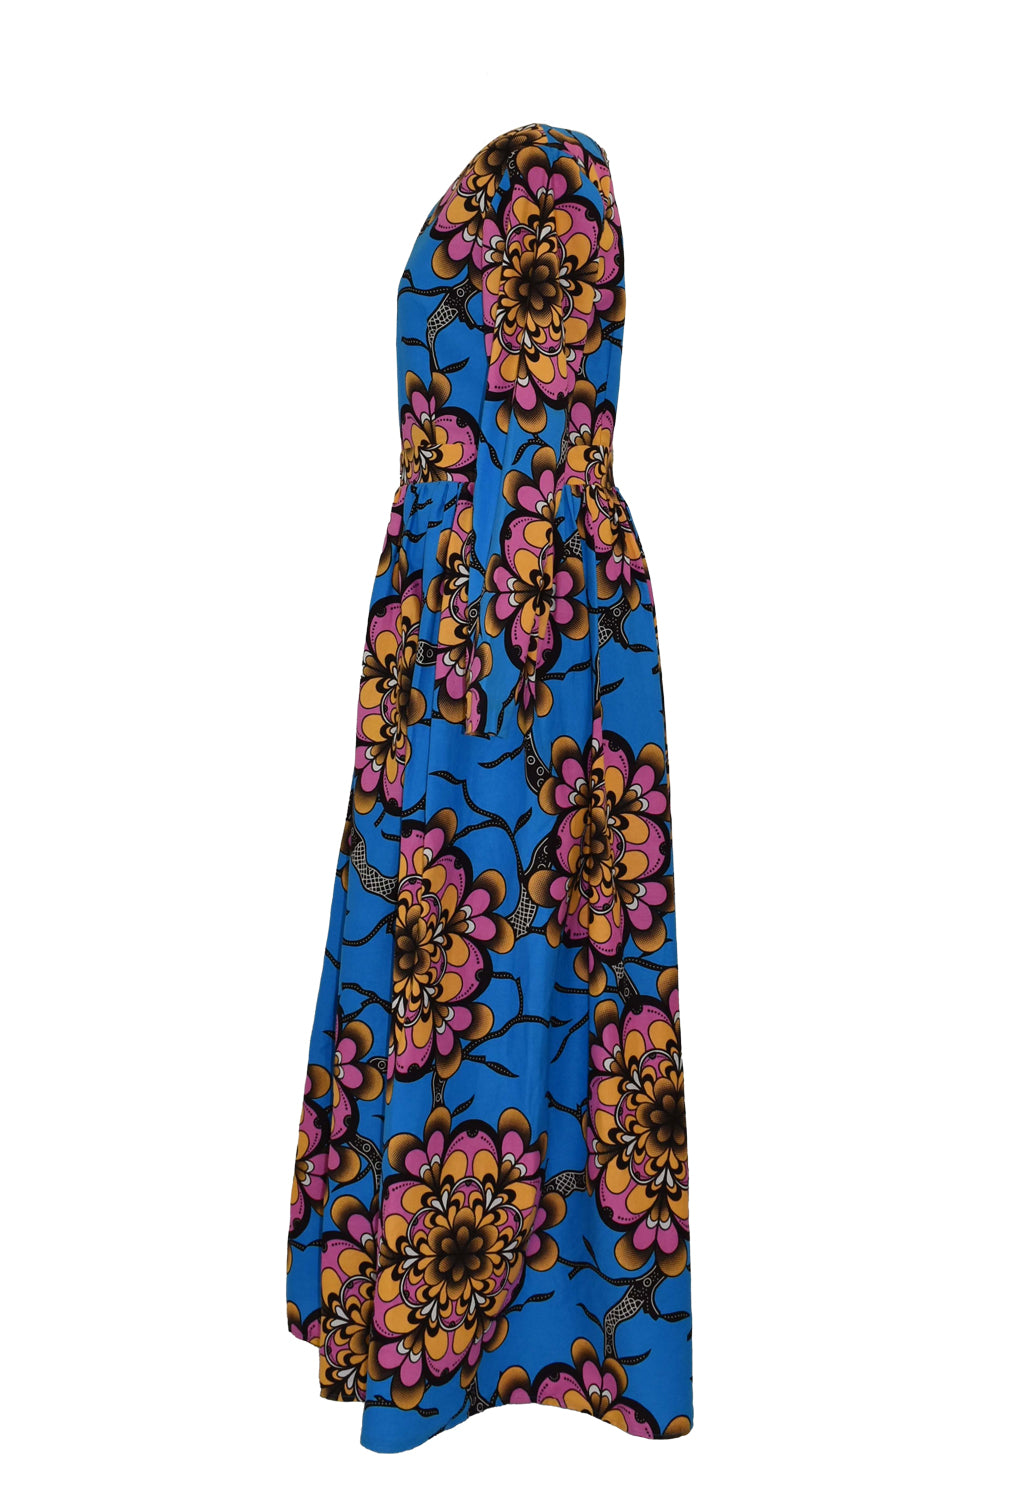 Dutch Wax Print Vivid Blue And Pink Maxi Dress | Vintage